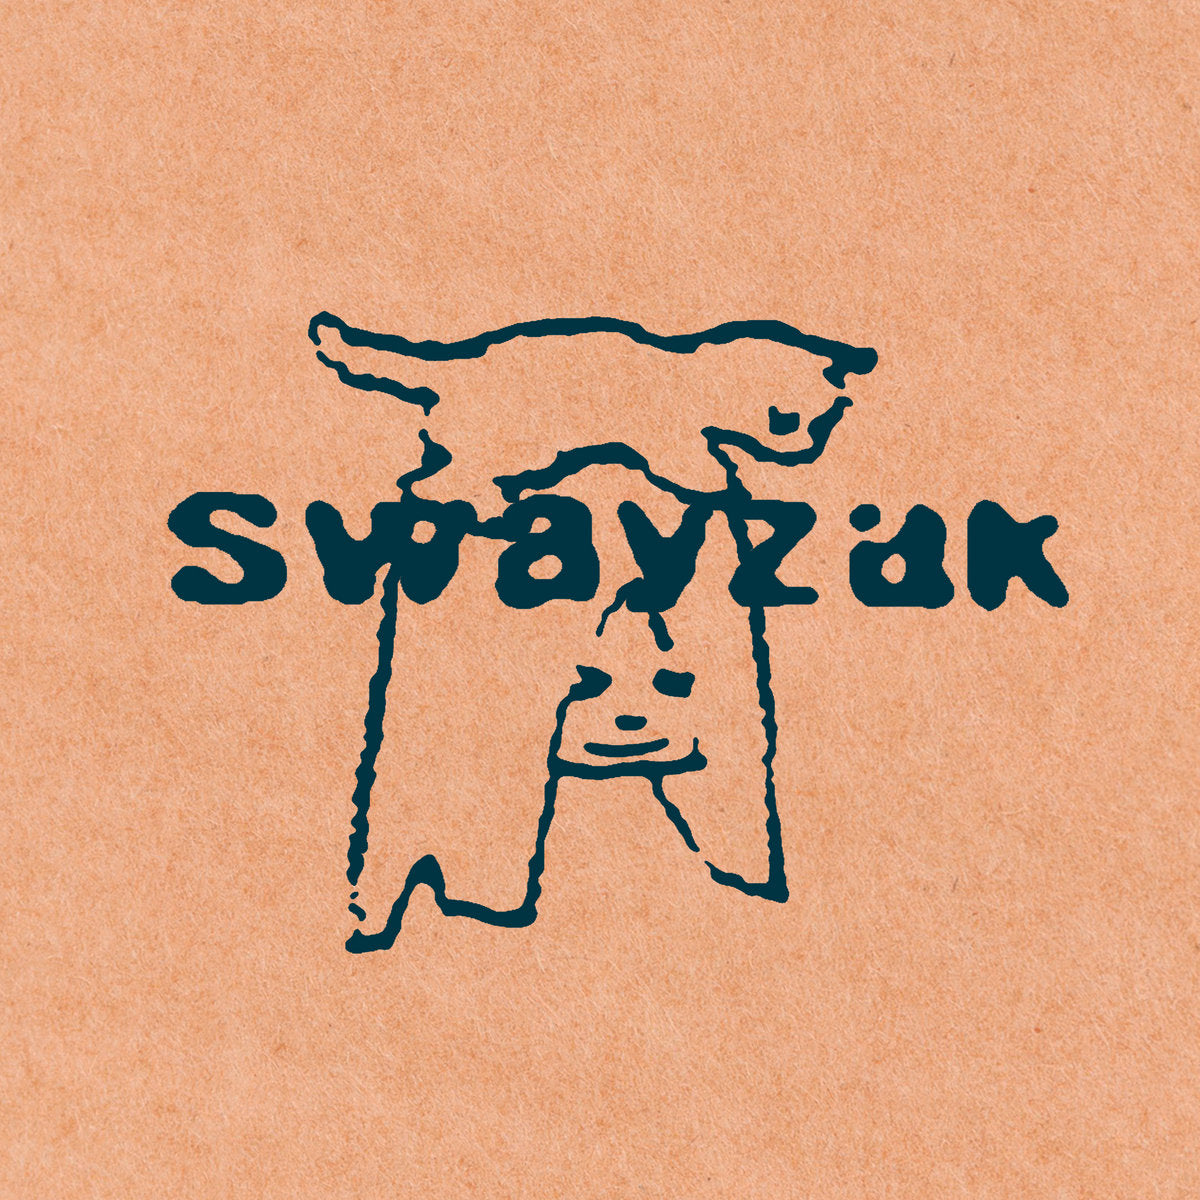 Swayzak – Snowboarding in Argentina (25th Anniversary Edition)